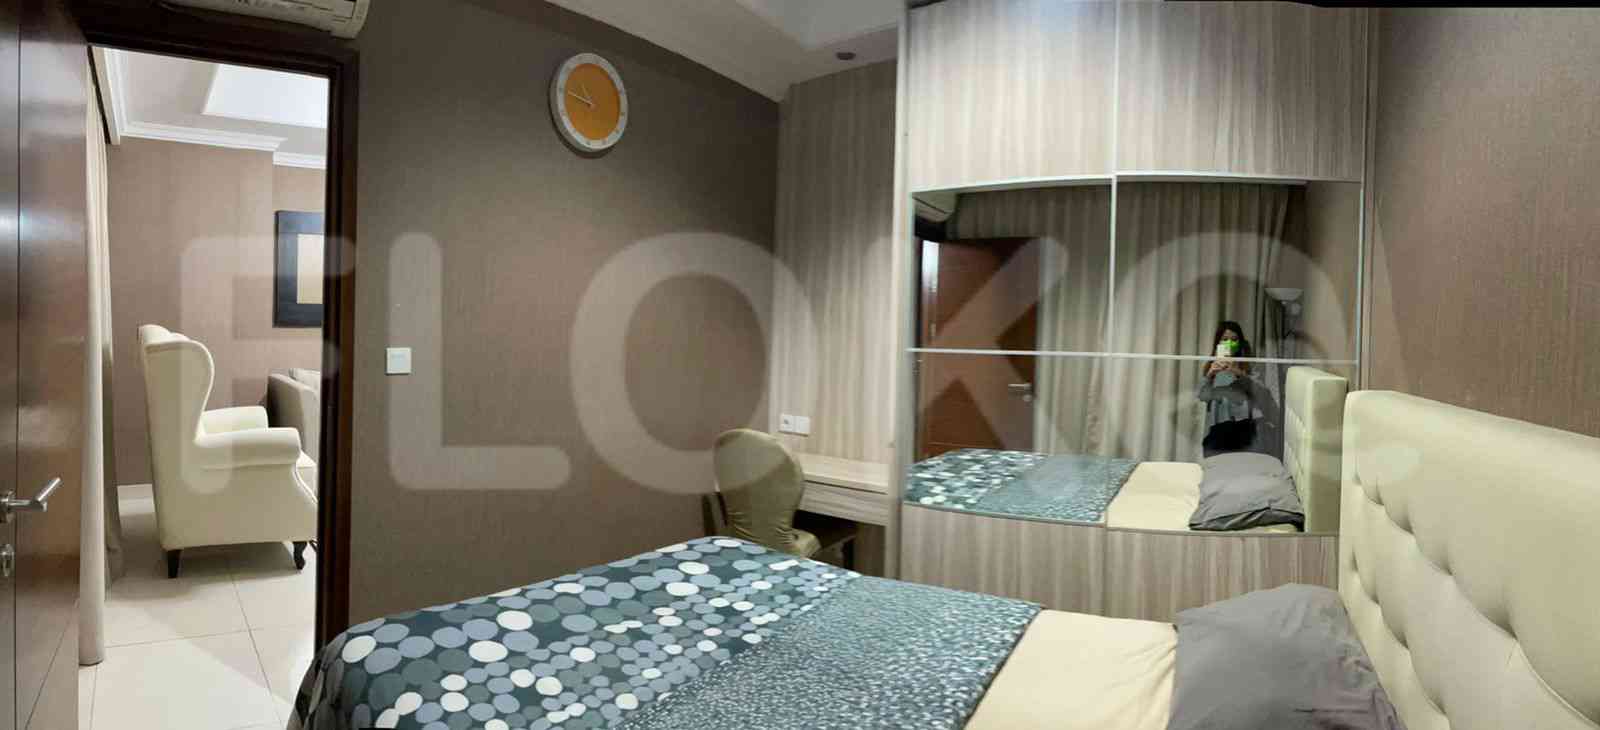 Tipe 2 Kamar Tidur di Lantai 20 untuk disewakan di Kuningan City (Denpasar Residence) - fku0ad 1